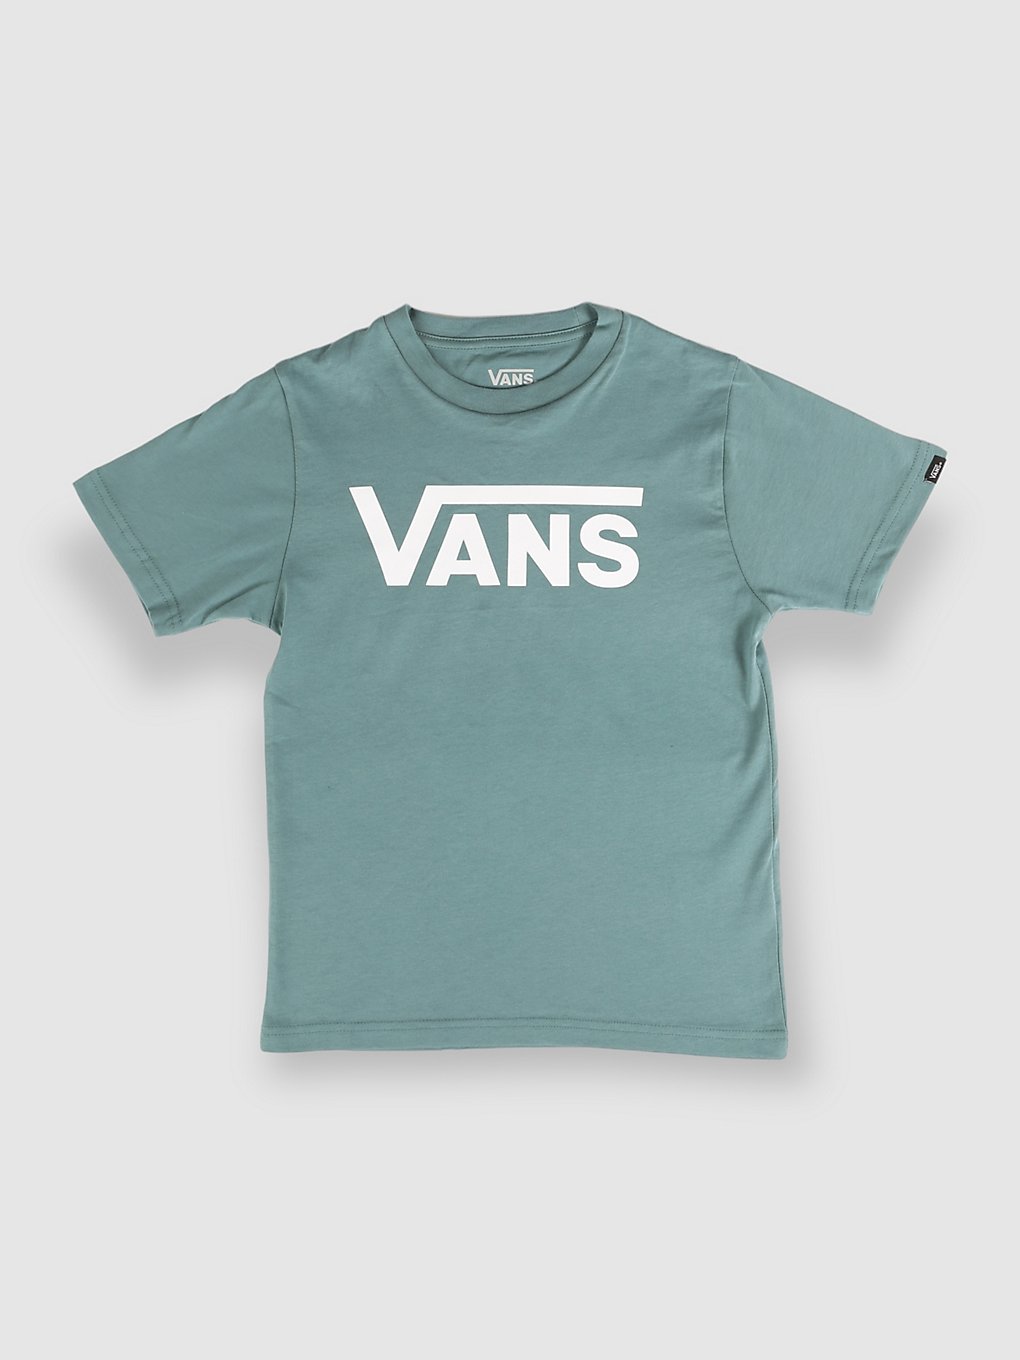 Vans Classic T-Shirt north atlantic kaufen